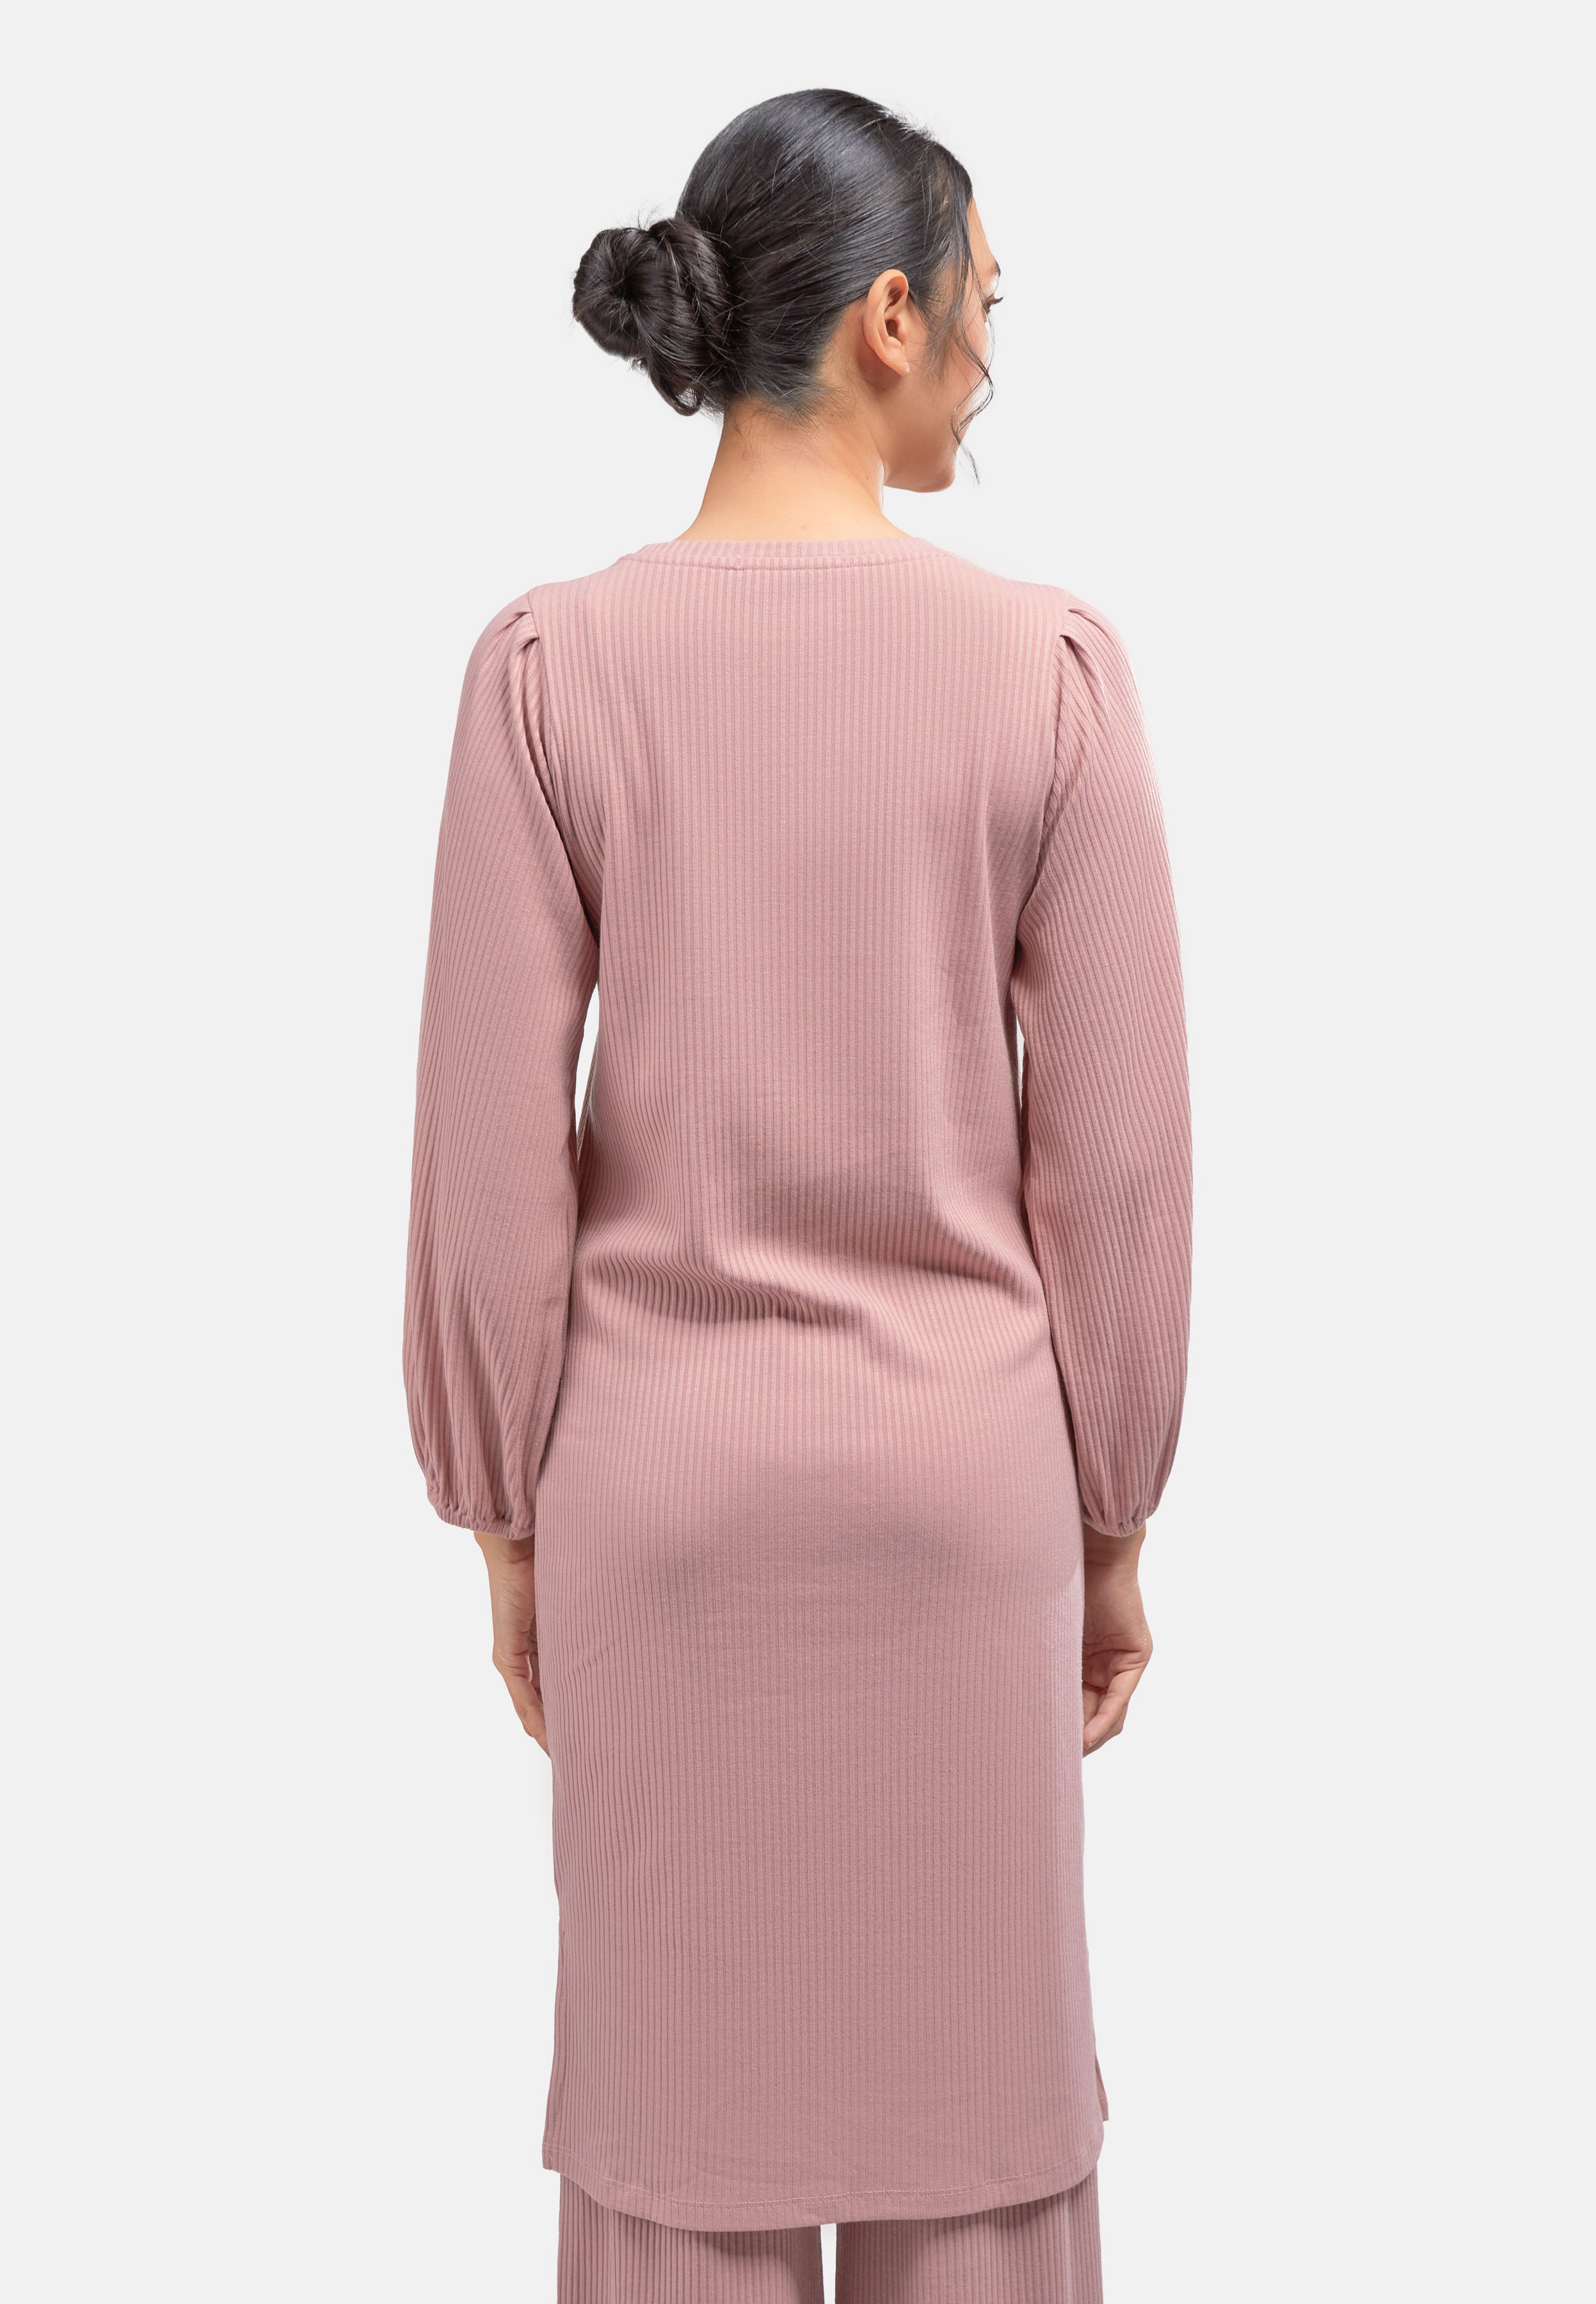 Arissa Puffed Long Sleeve Dress - ARS-6778 (MD2)